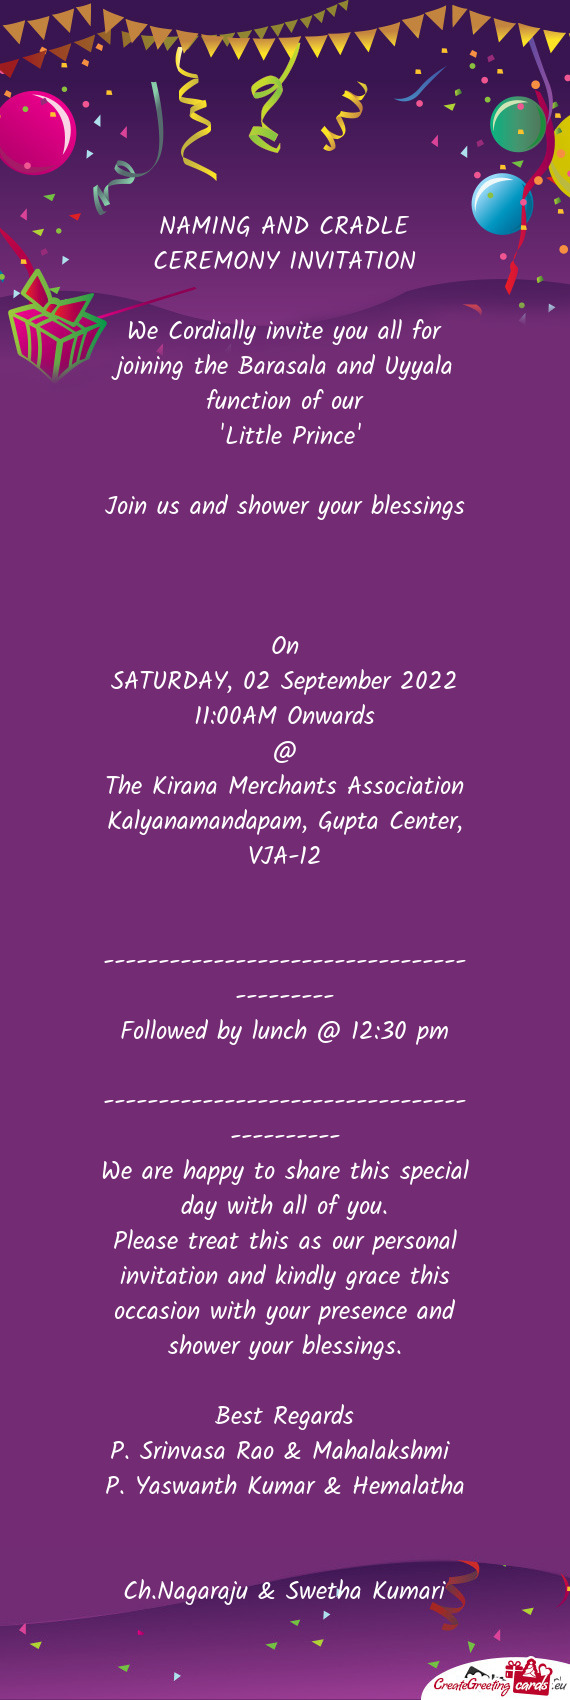 The Kirana Merchants Association Kalyanamandapam, Gupta Center, VJA-12